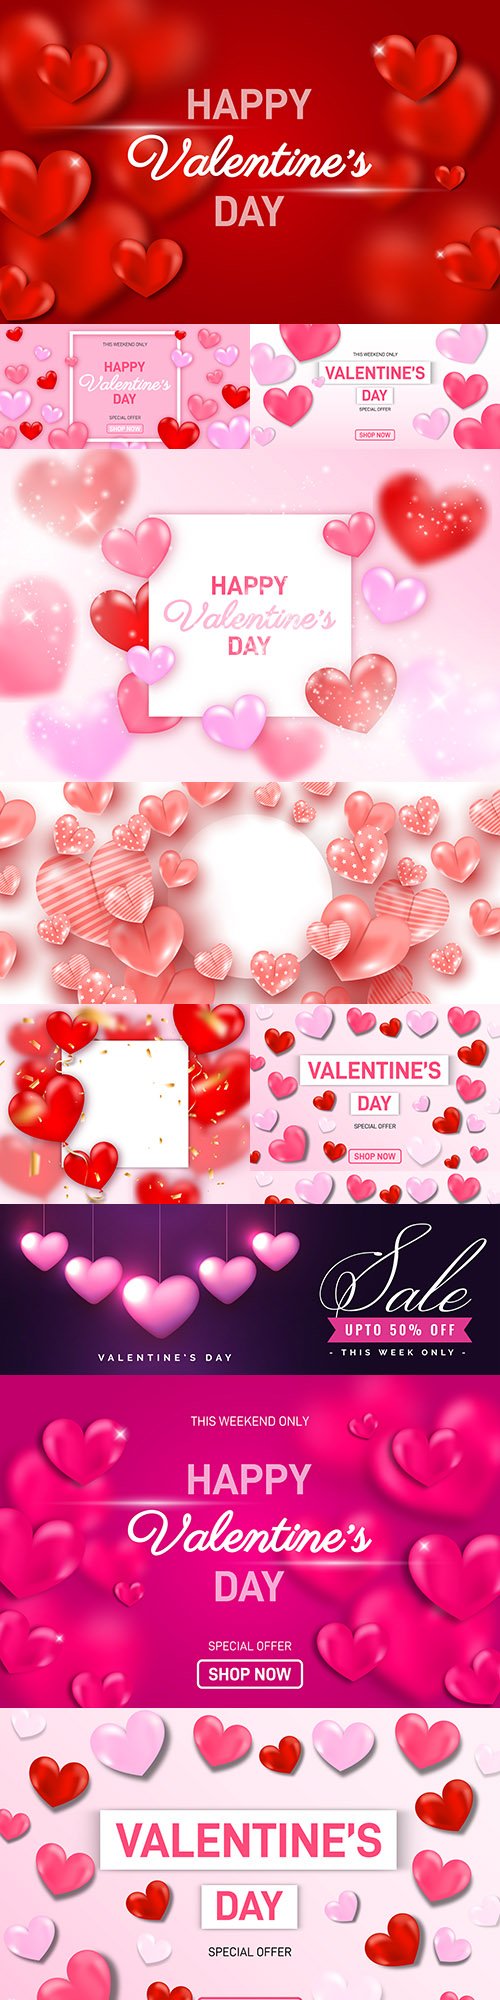 Happy Valentine's Day romantic decorative illustrations 49